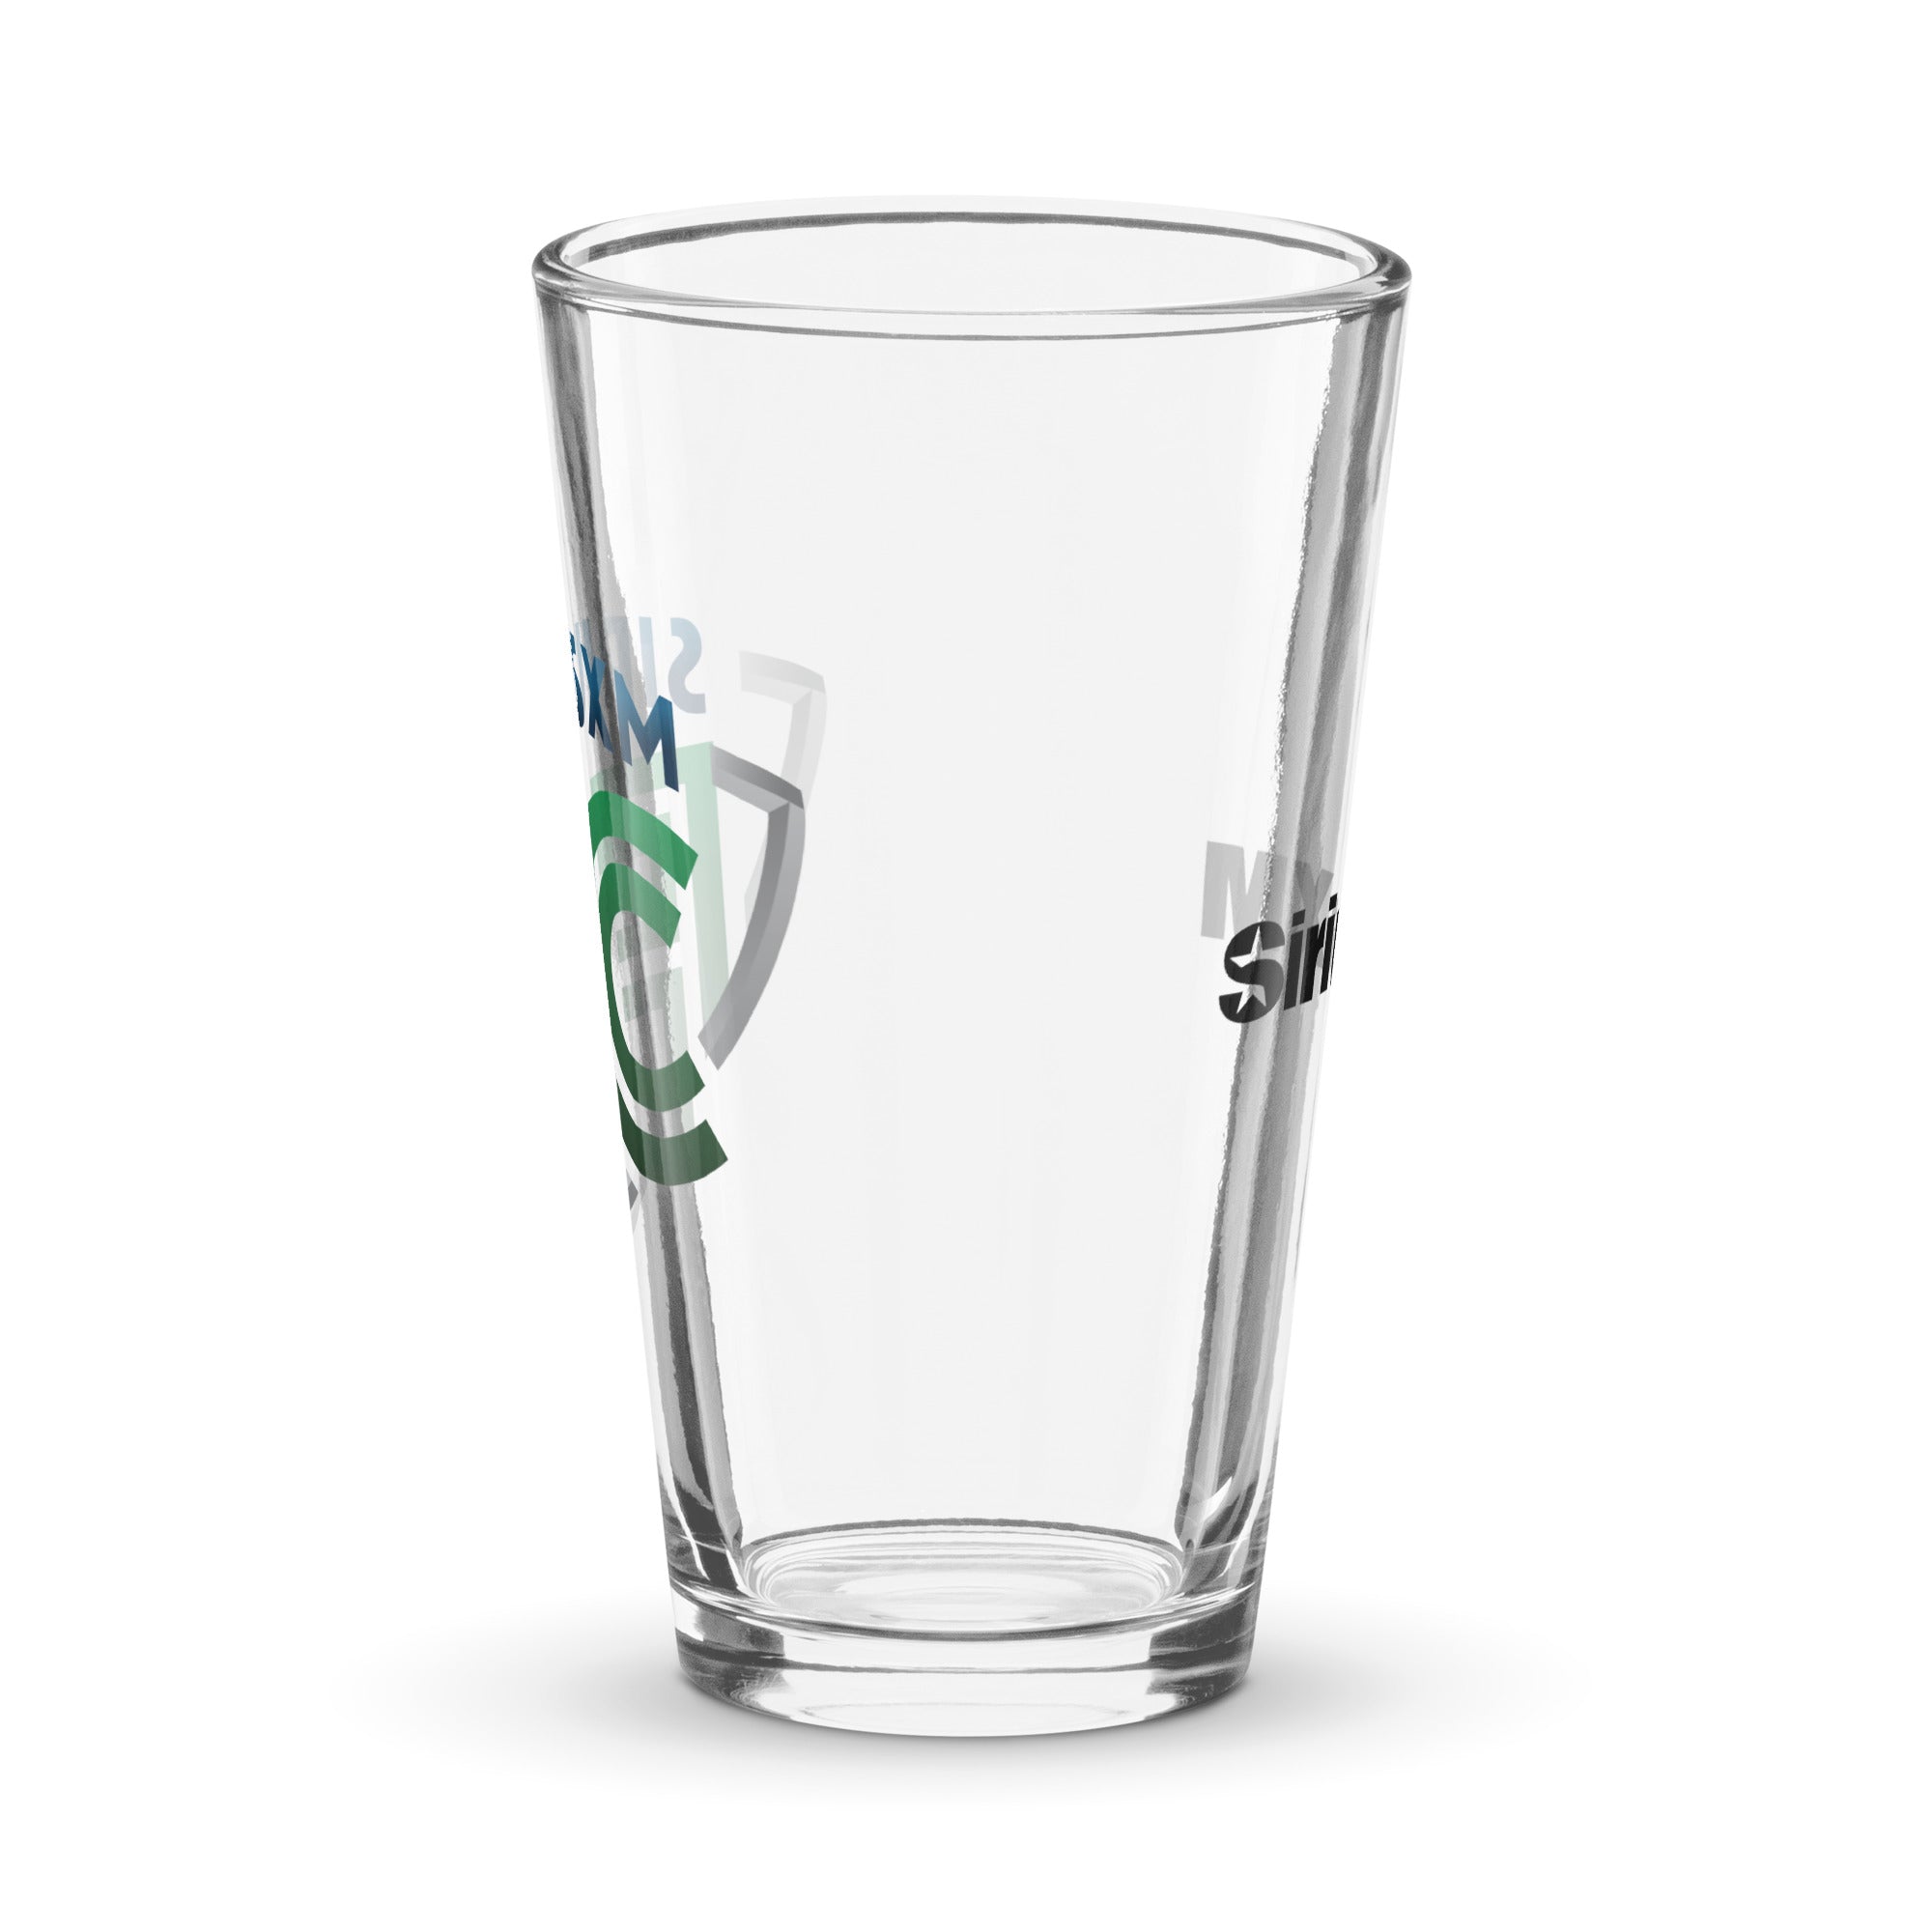 SiriusXM FC: Pint Glass